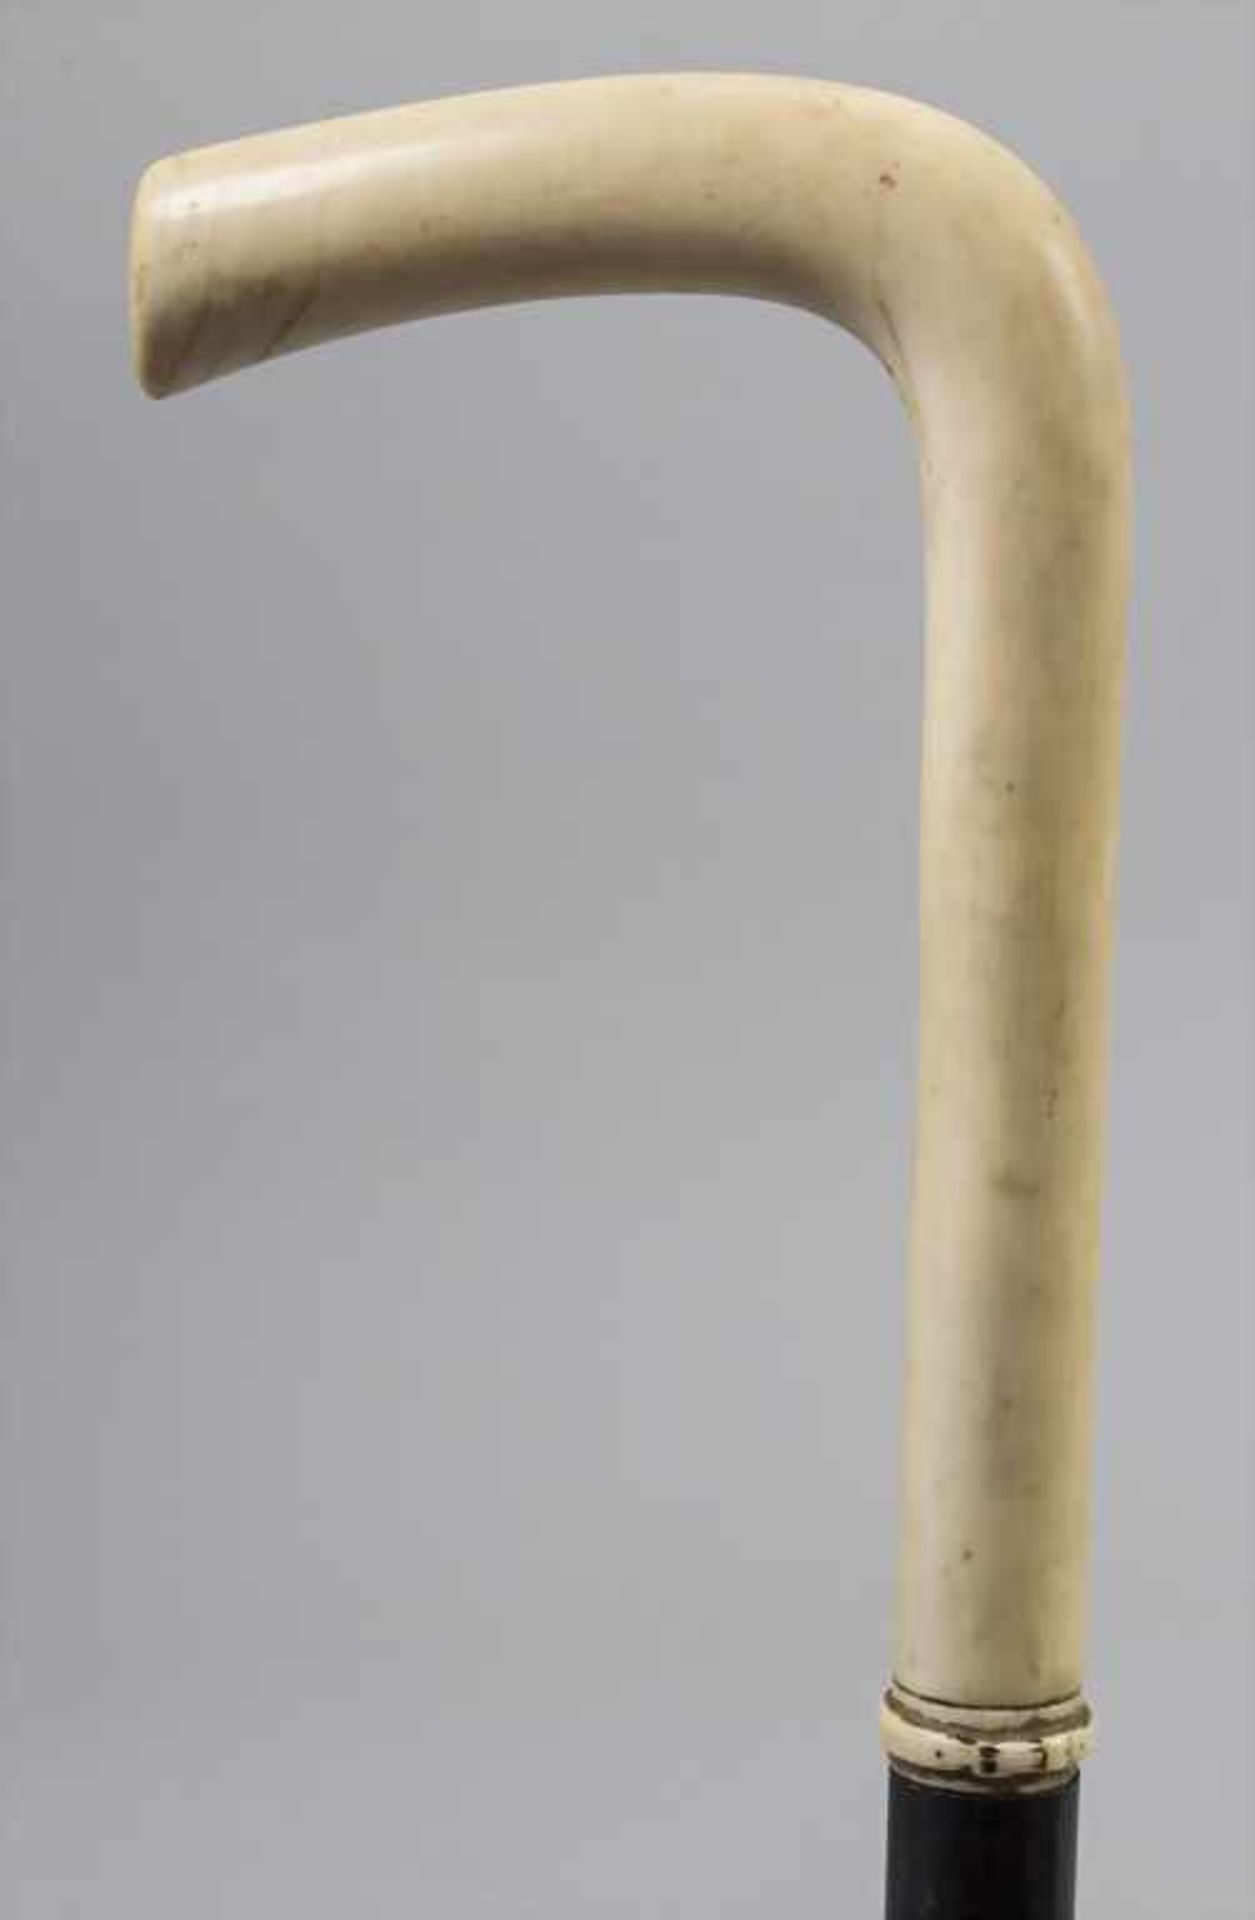 Sammlung 10 Gehstöcke / A collection of 10 canes with ivory handle - Bild 14 aus 27